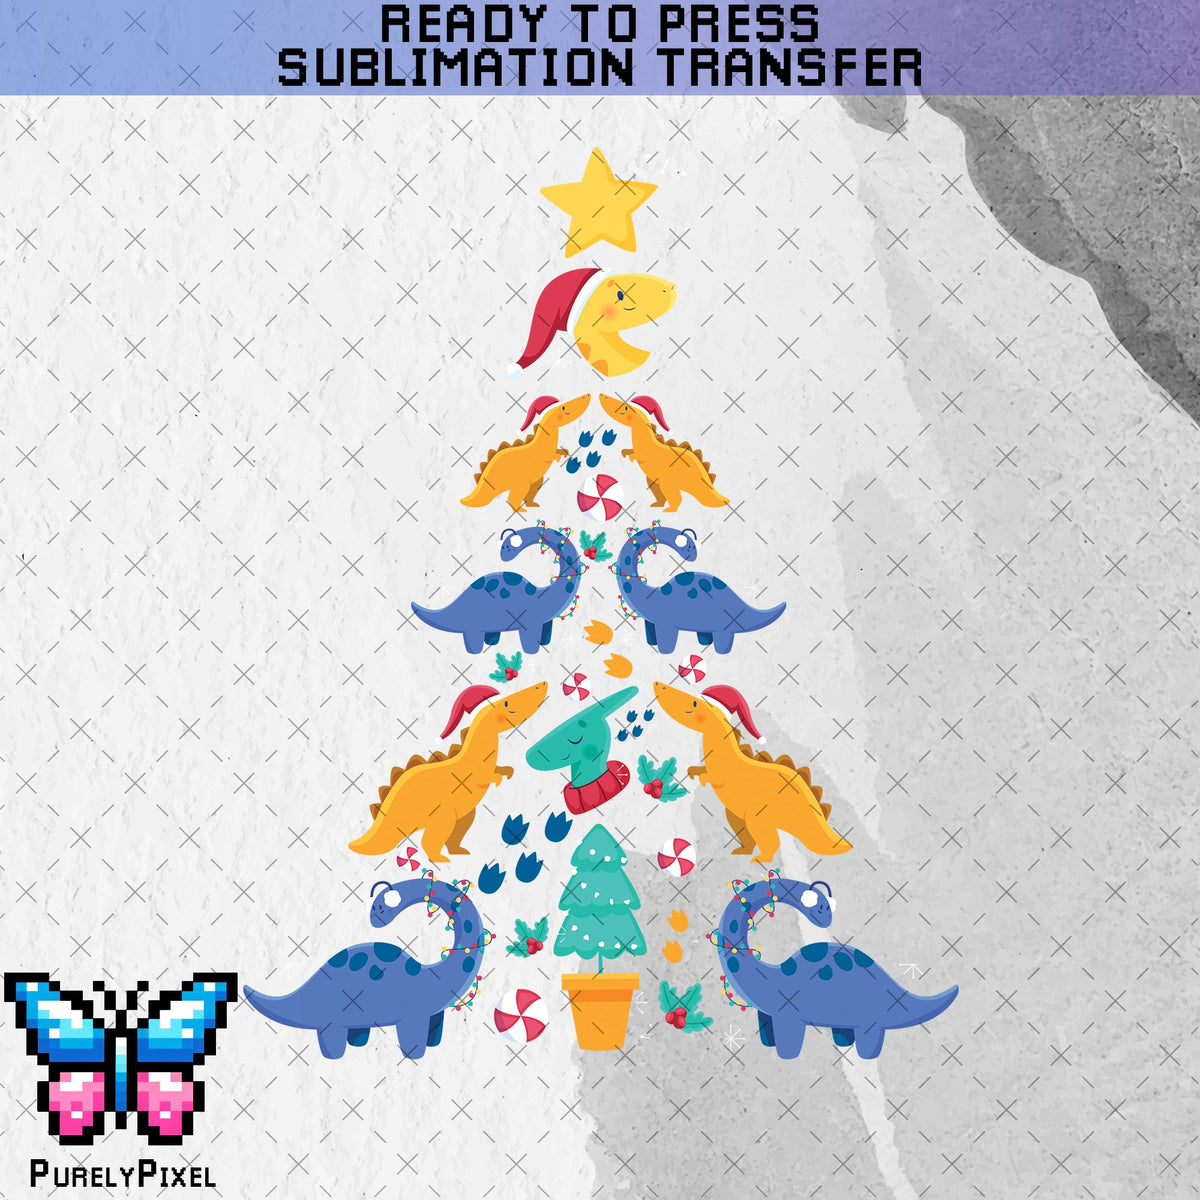 Dinosaur Christmas Tree Sub Transfer | Christmas Dinosaurs Transfer | Kids Christmas Sub | Ready to Press Sublimation Transfer | PurelyPixels | Sublimation Transfers